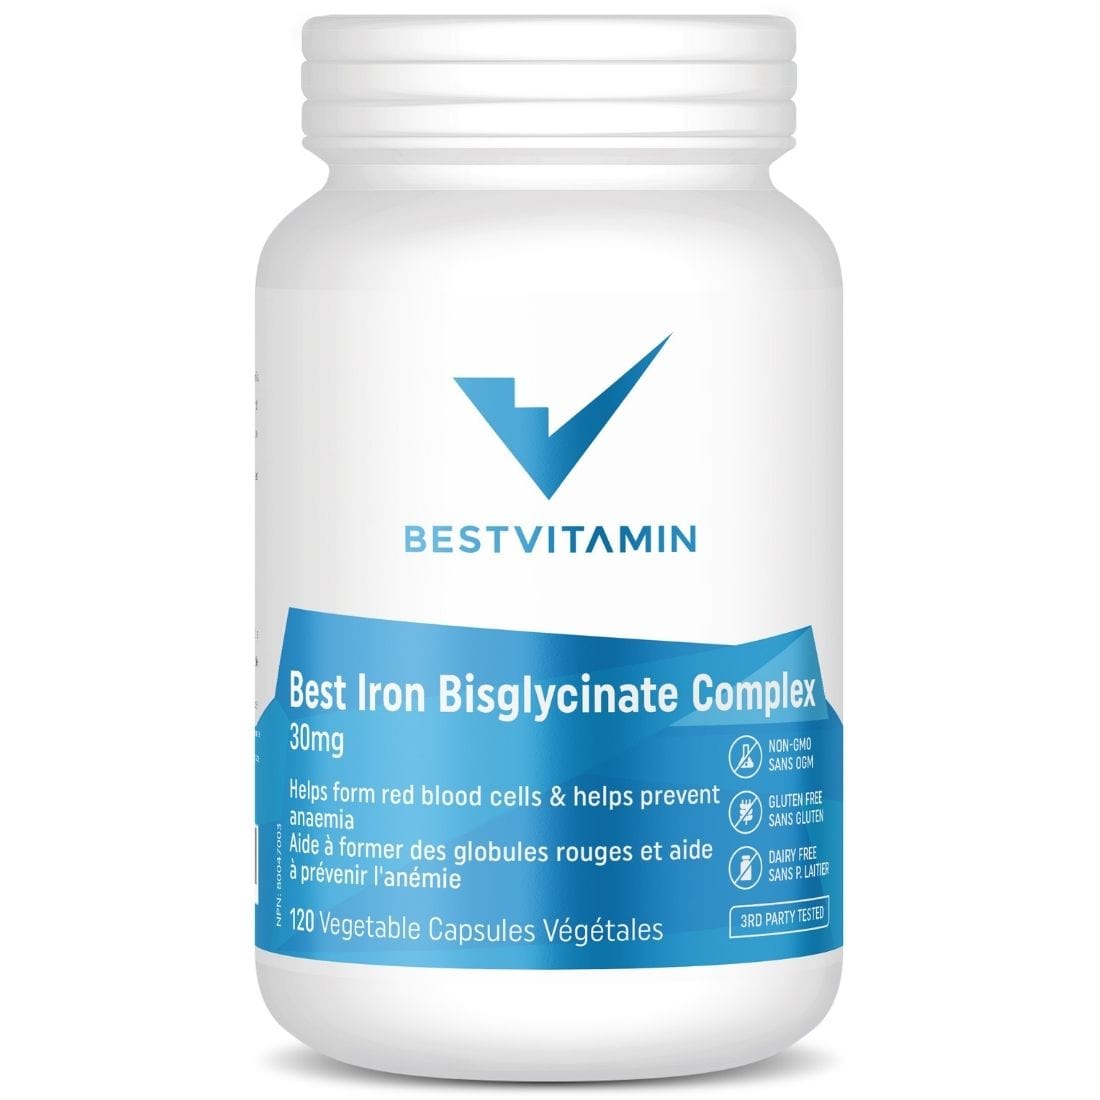 BestVitamin Best Iron Bisglycinate Complex, 30mg Iron, Enhanced bioavailability